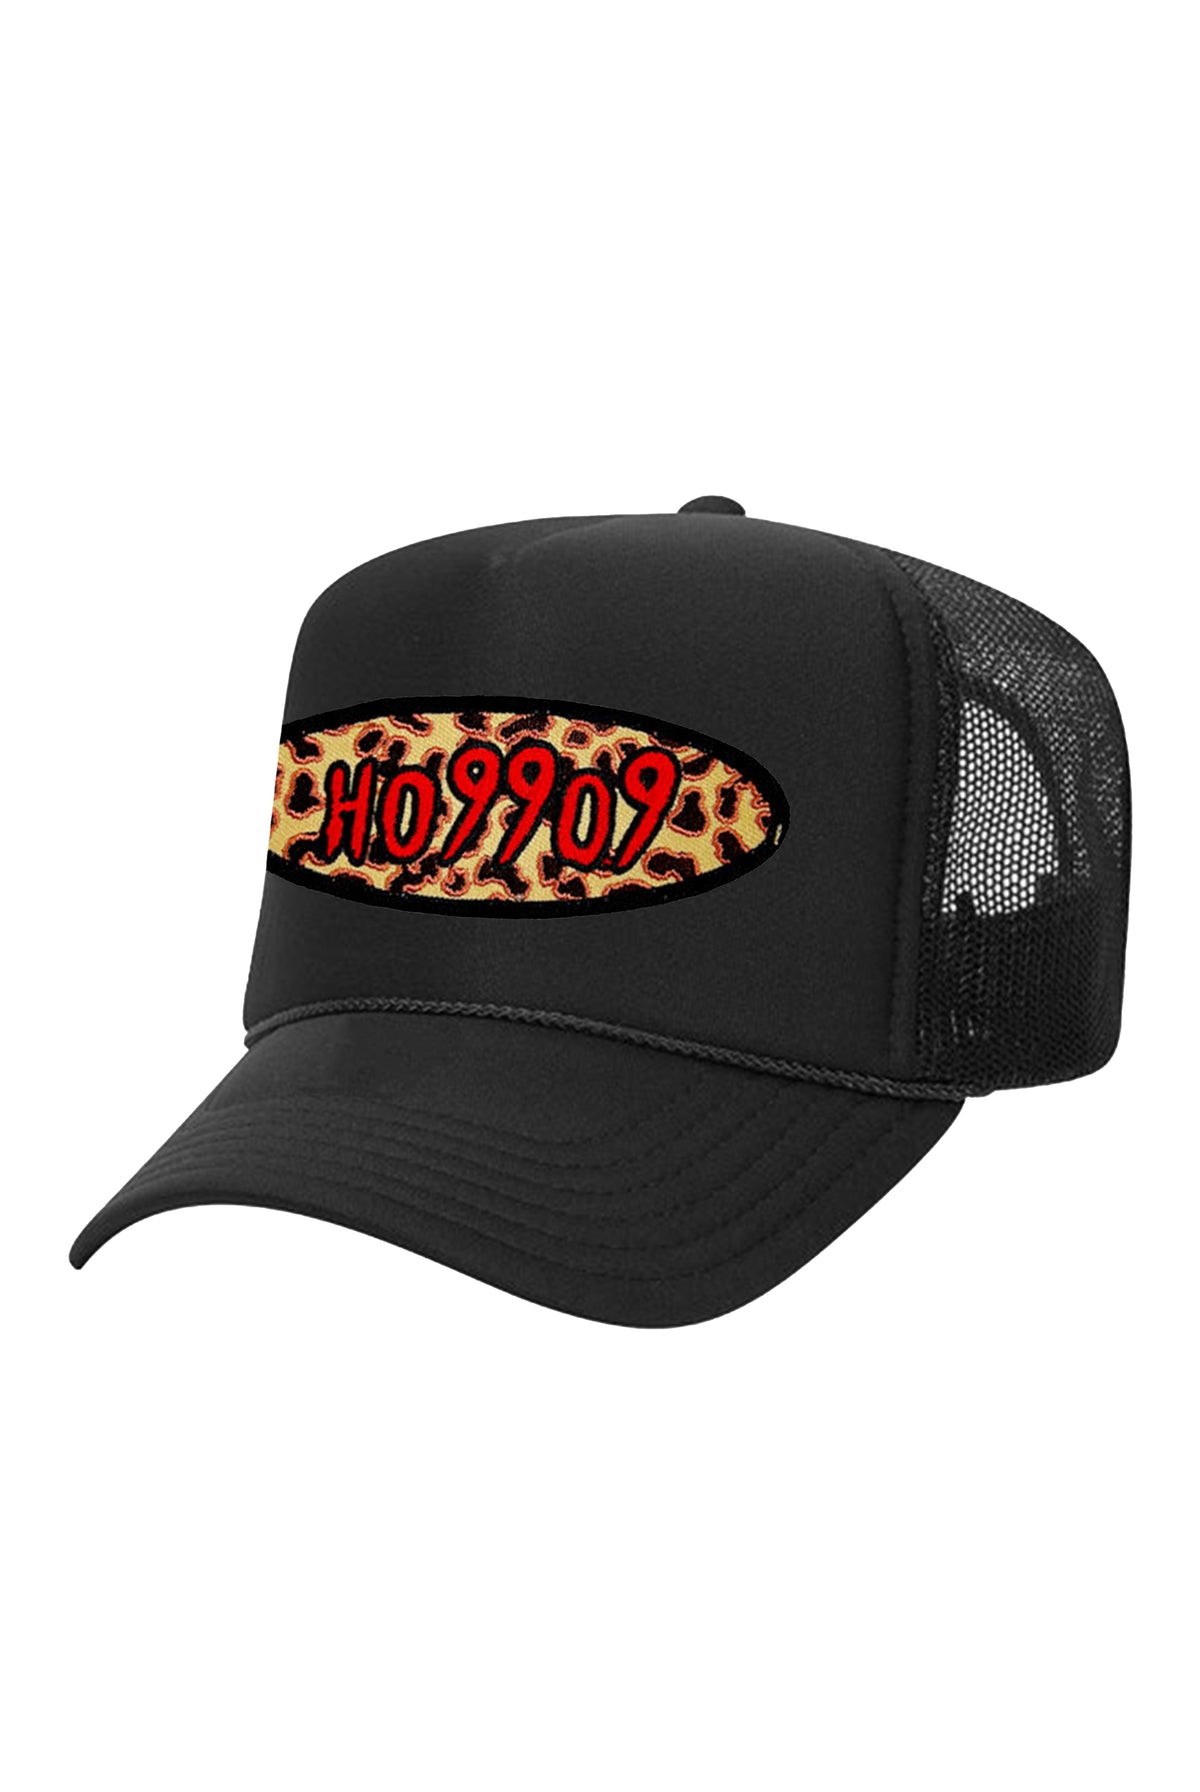 Cheetah Trucker Hat (Black)